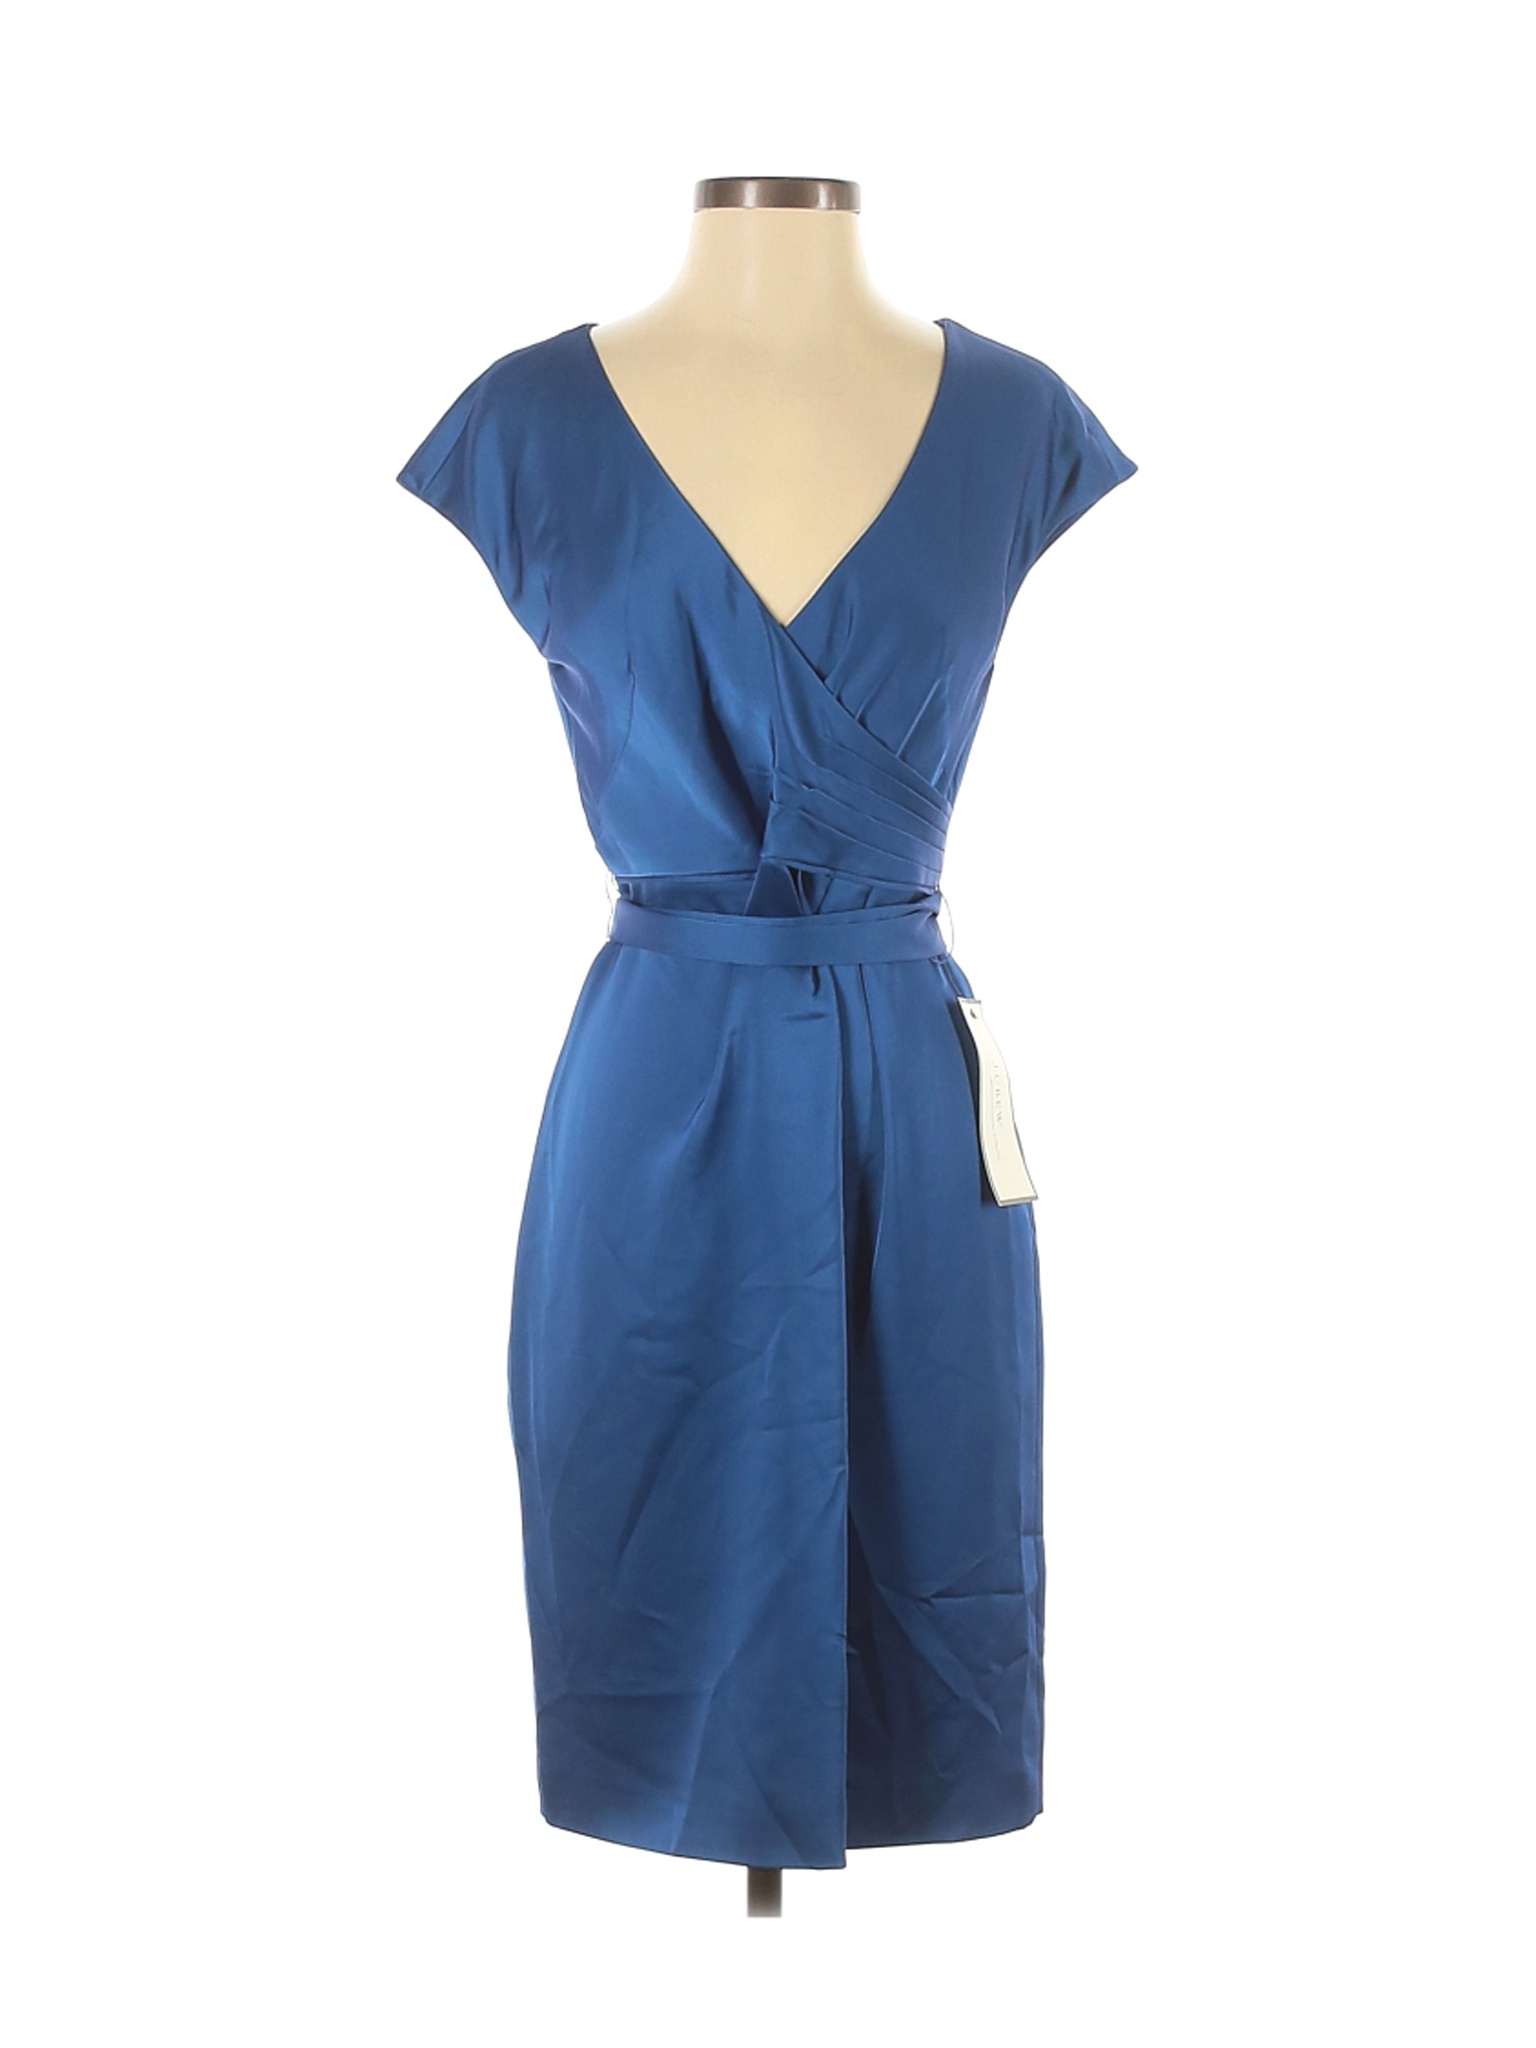 NWT J.Crew Women Blue Cocktail Dress 2 | eBay